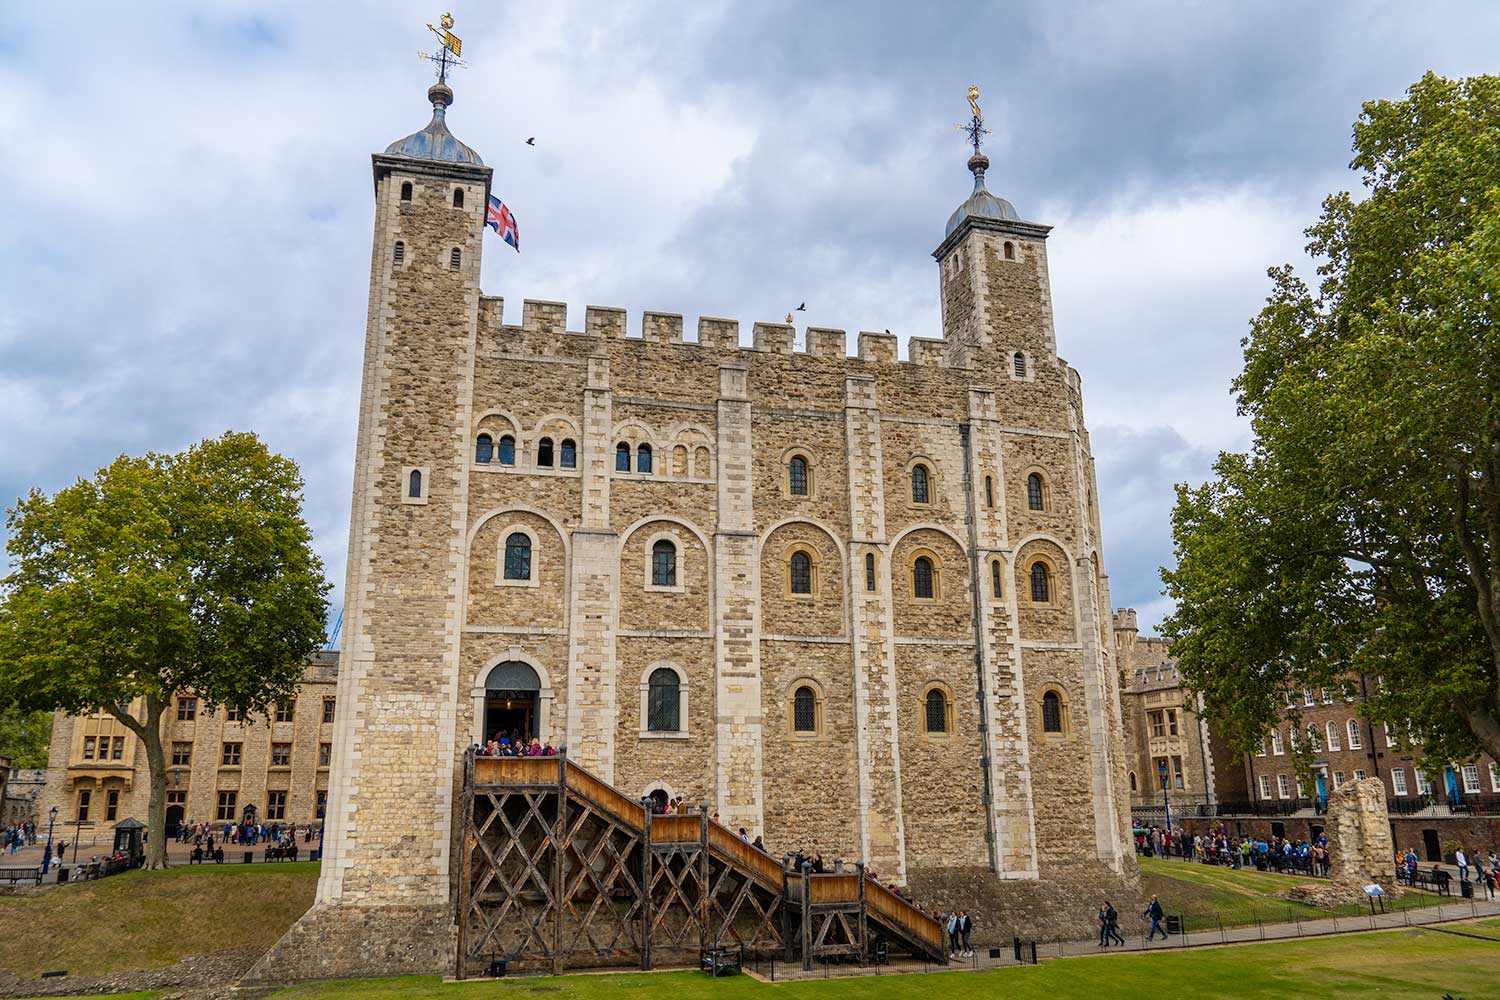 Tower of London, London, United Kingdom